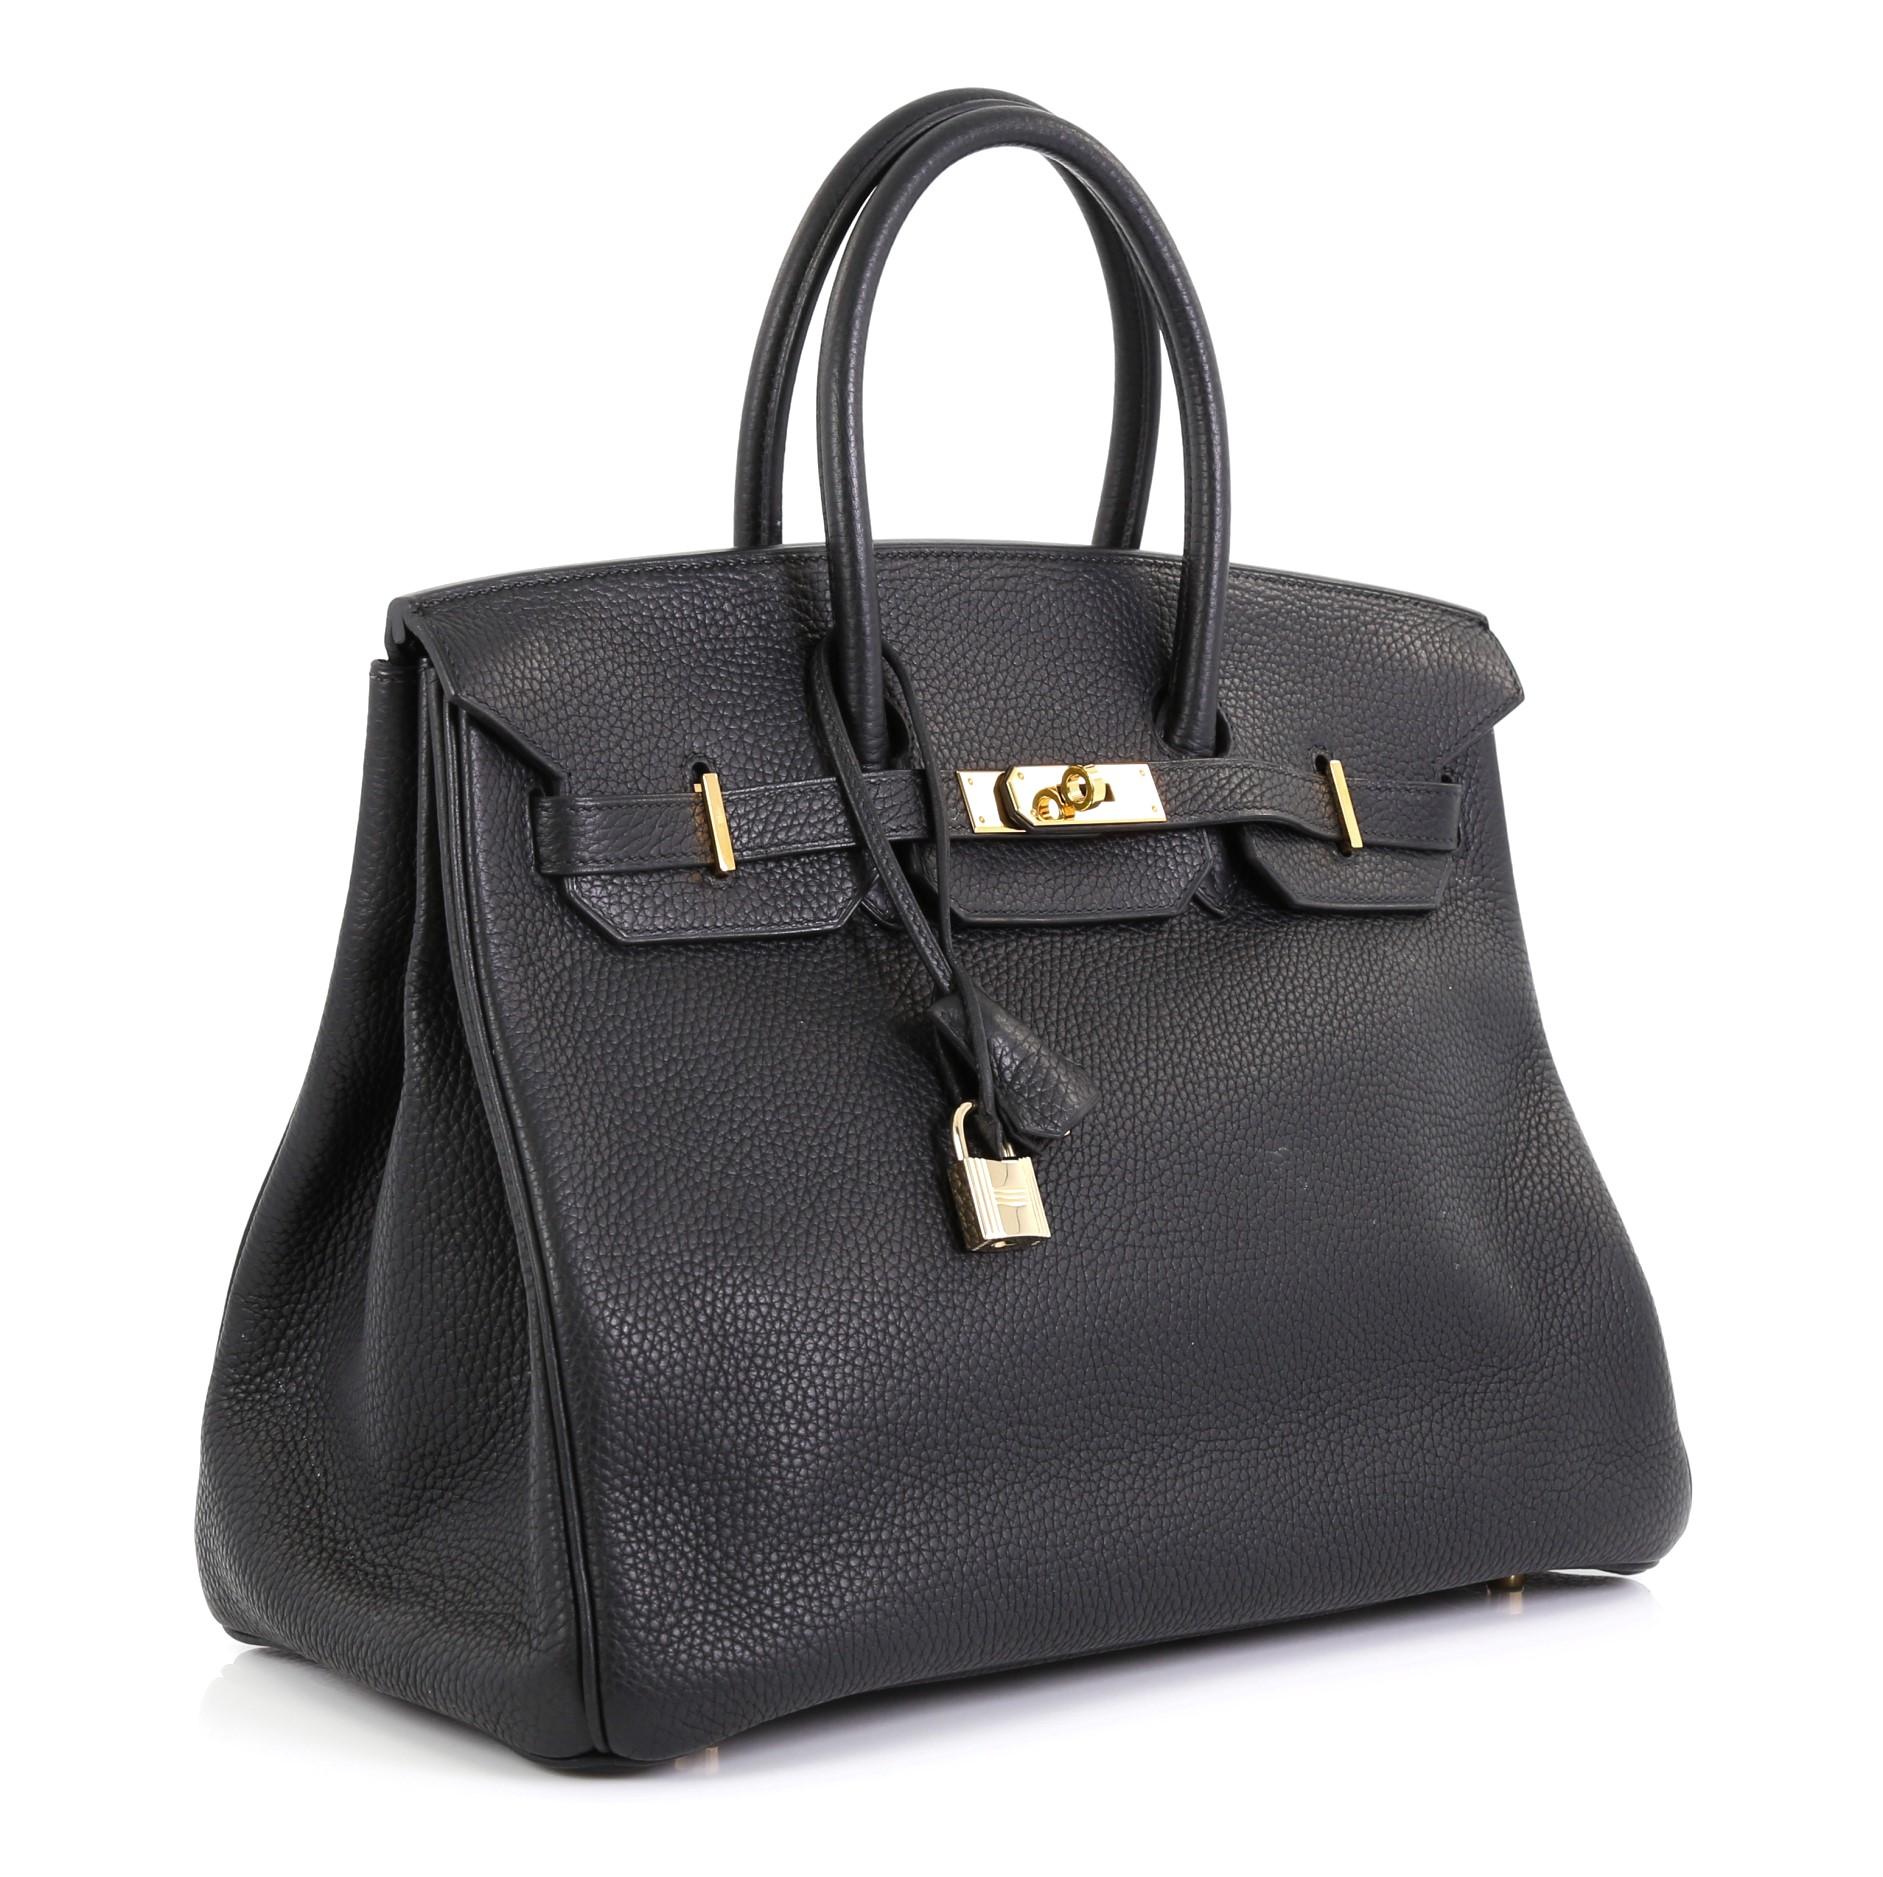 Black Hermes Birkin Handbag Noir Clemence with Gold Hardware 35